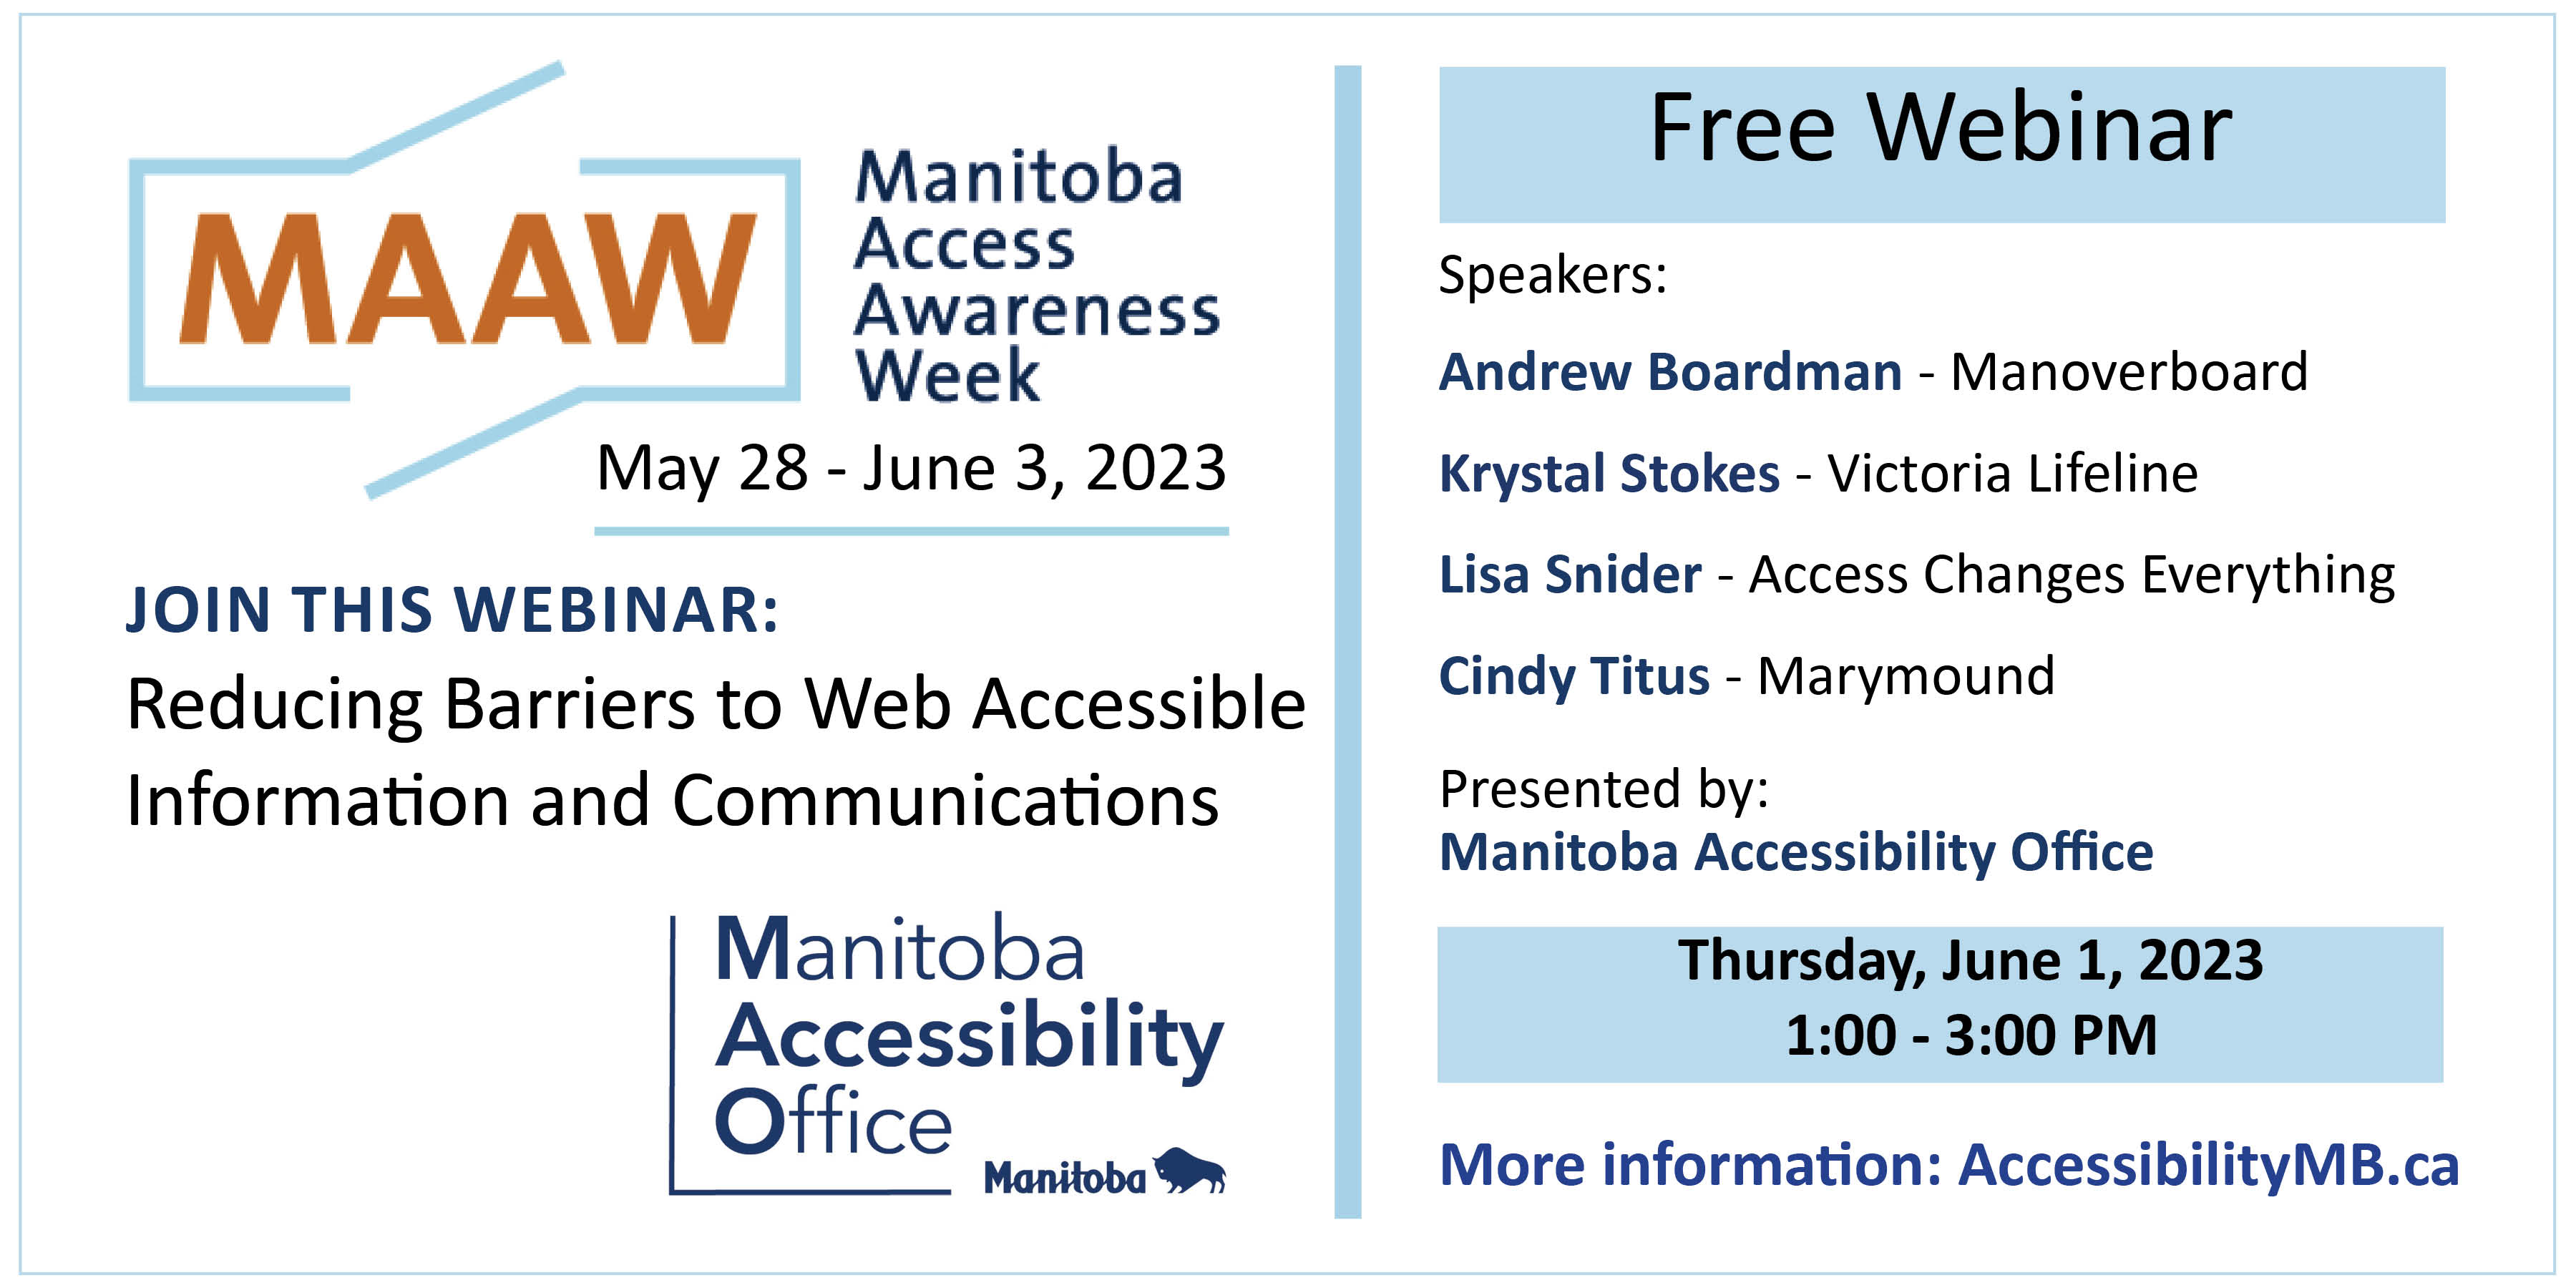 Manitoba Access Awareness Week Details